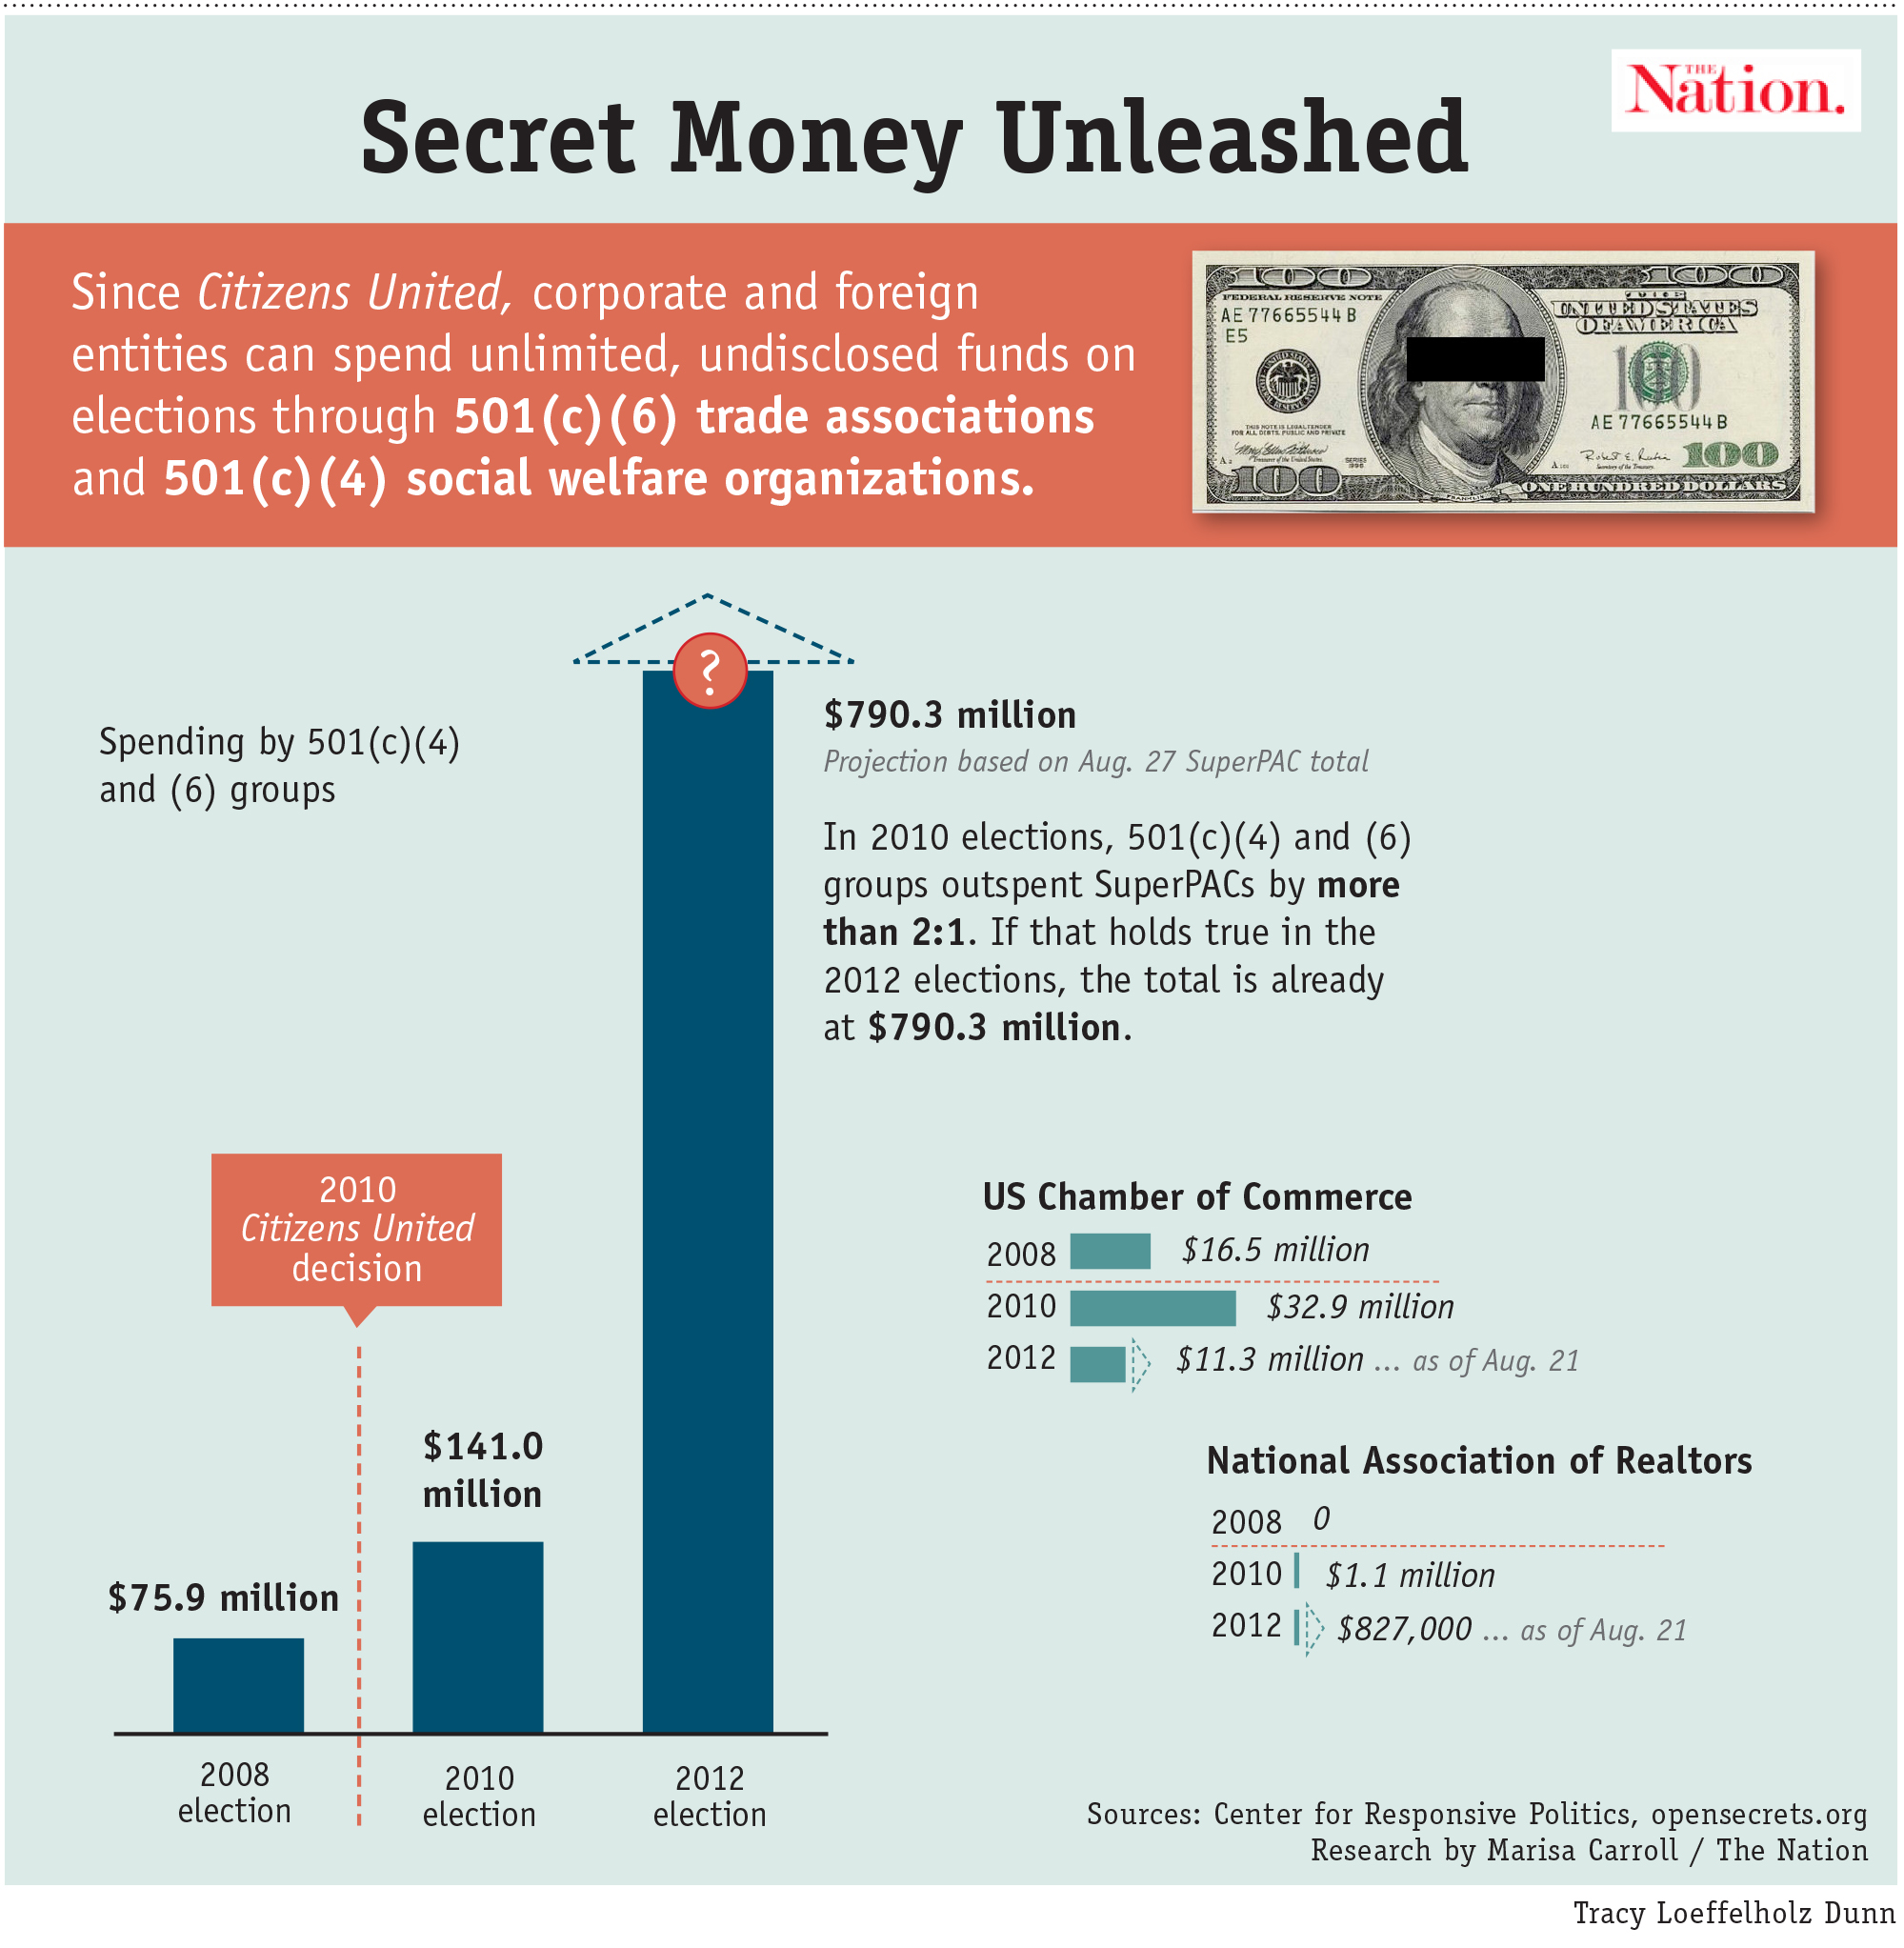 Secret Money unleashed